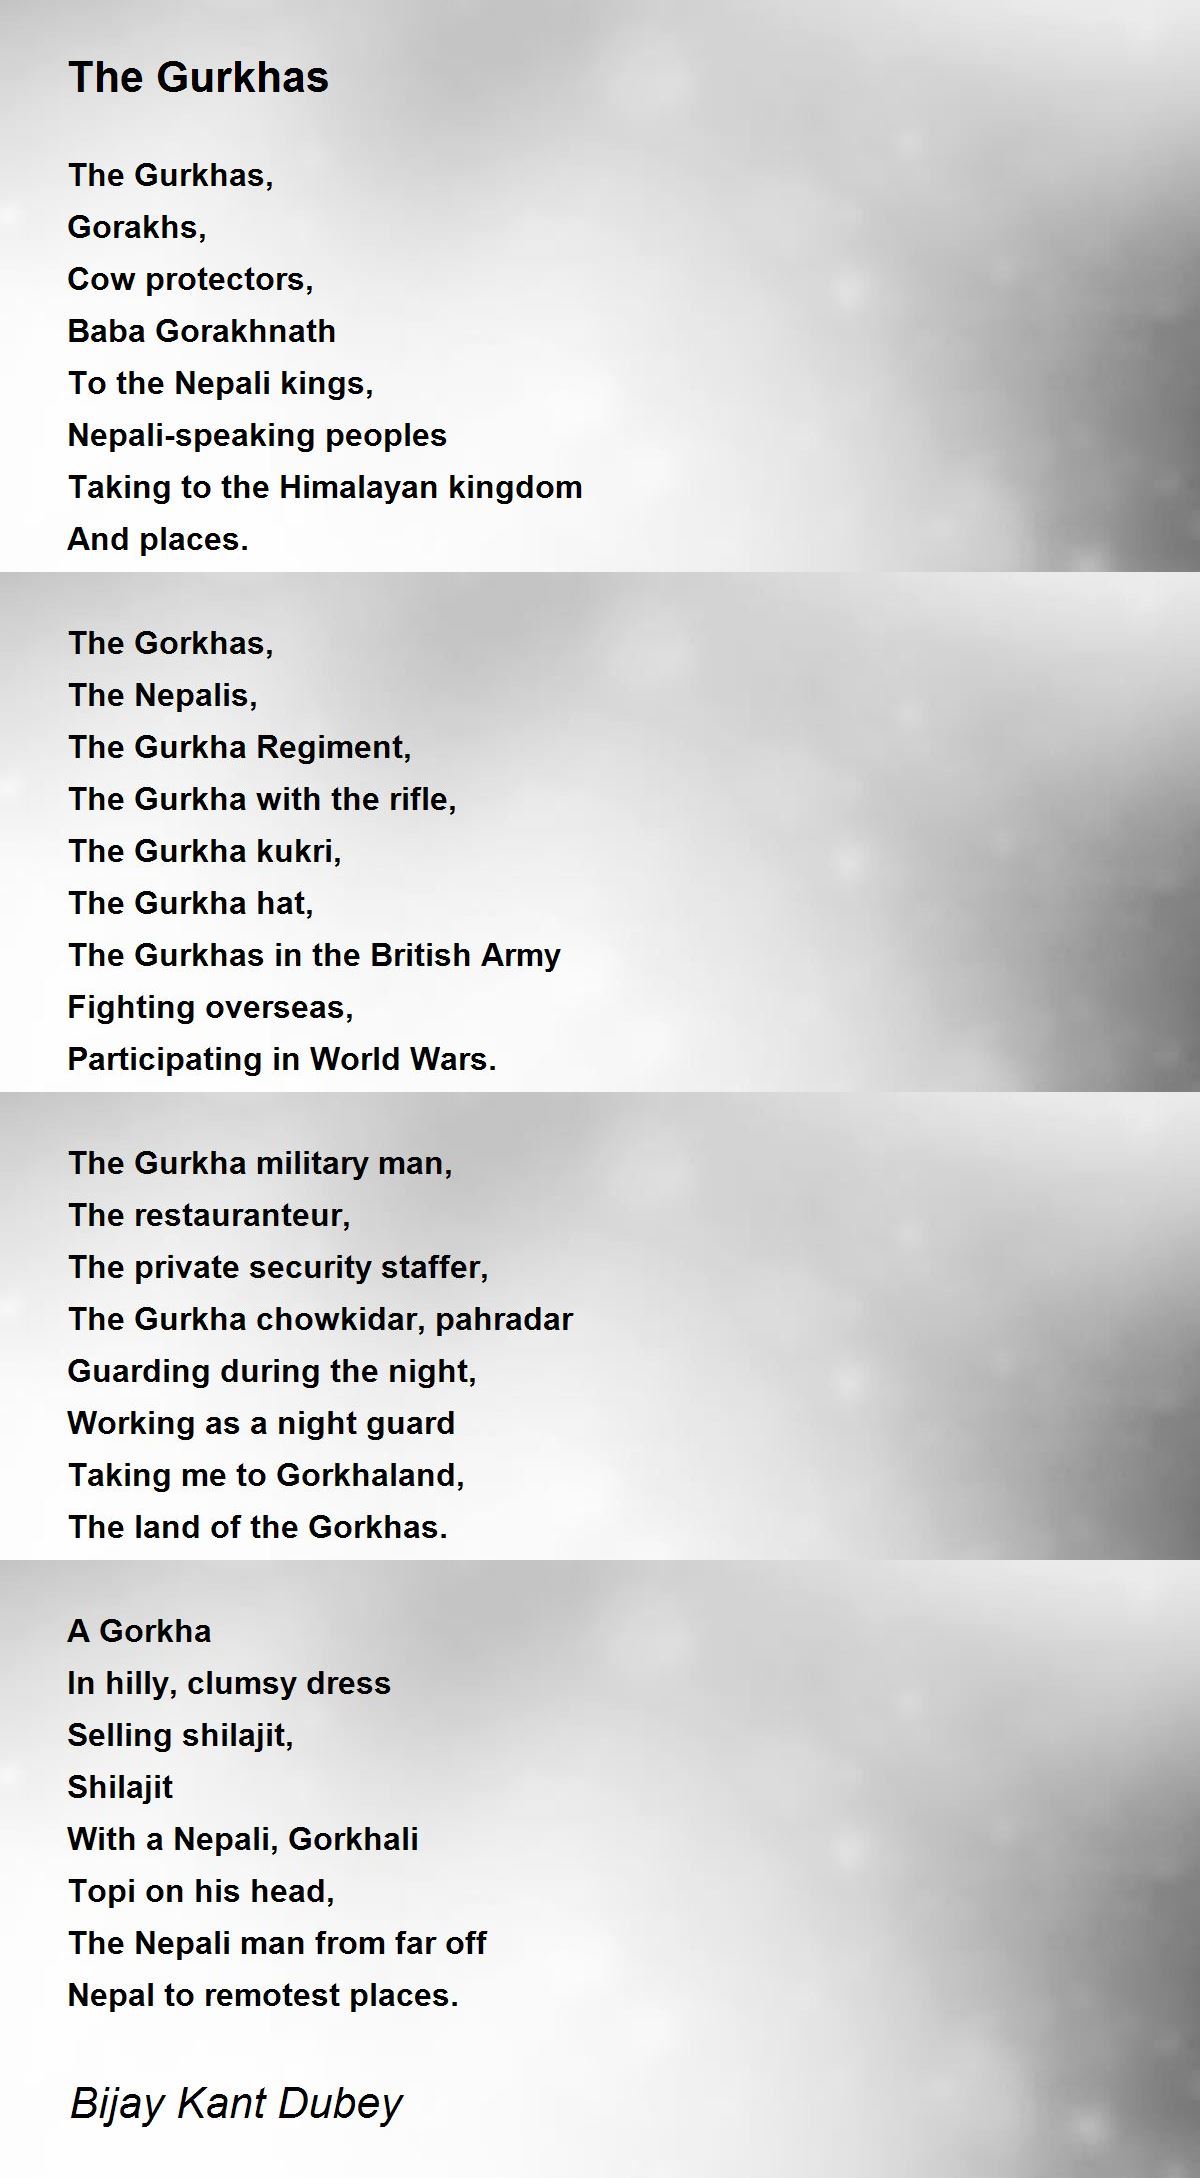 The Gurkhas - The Gurkhas Poem by Bijay Kant Dubey